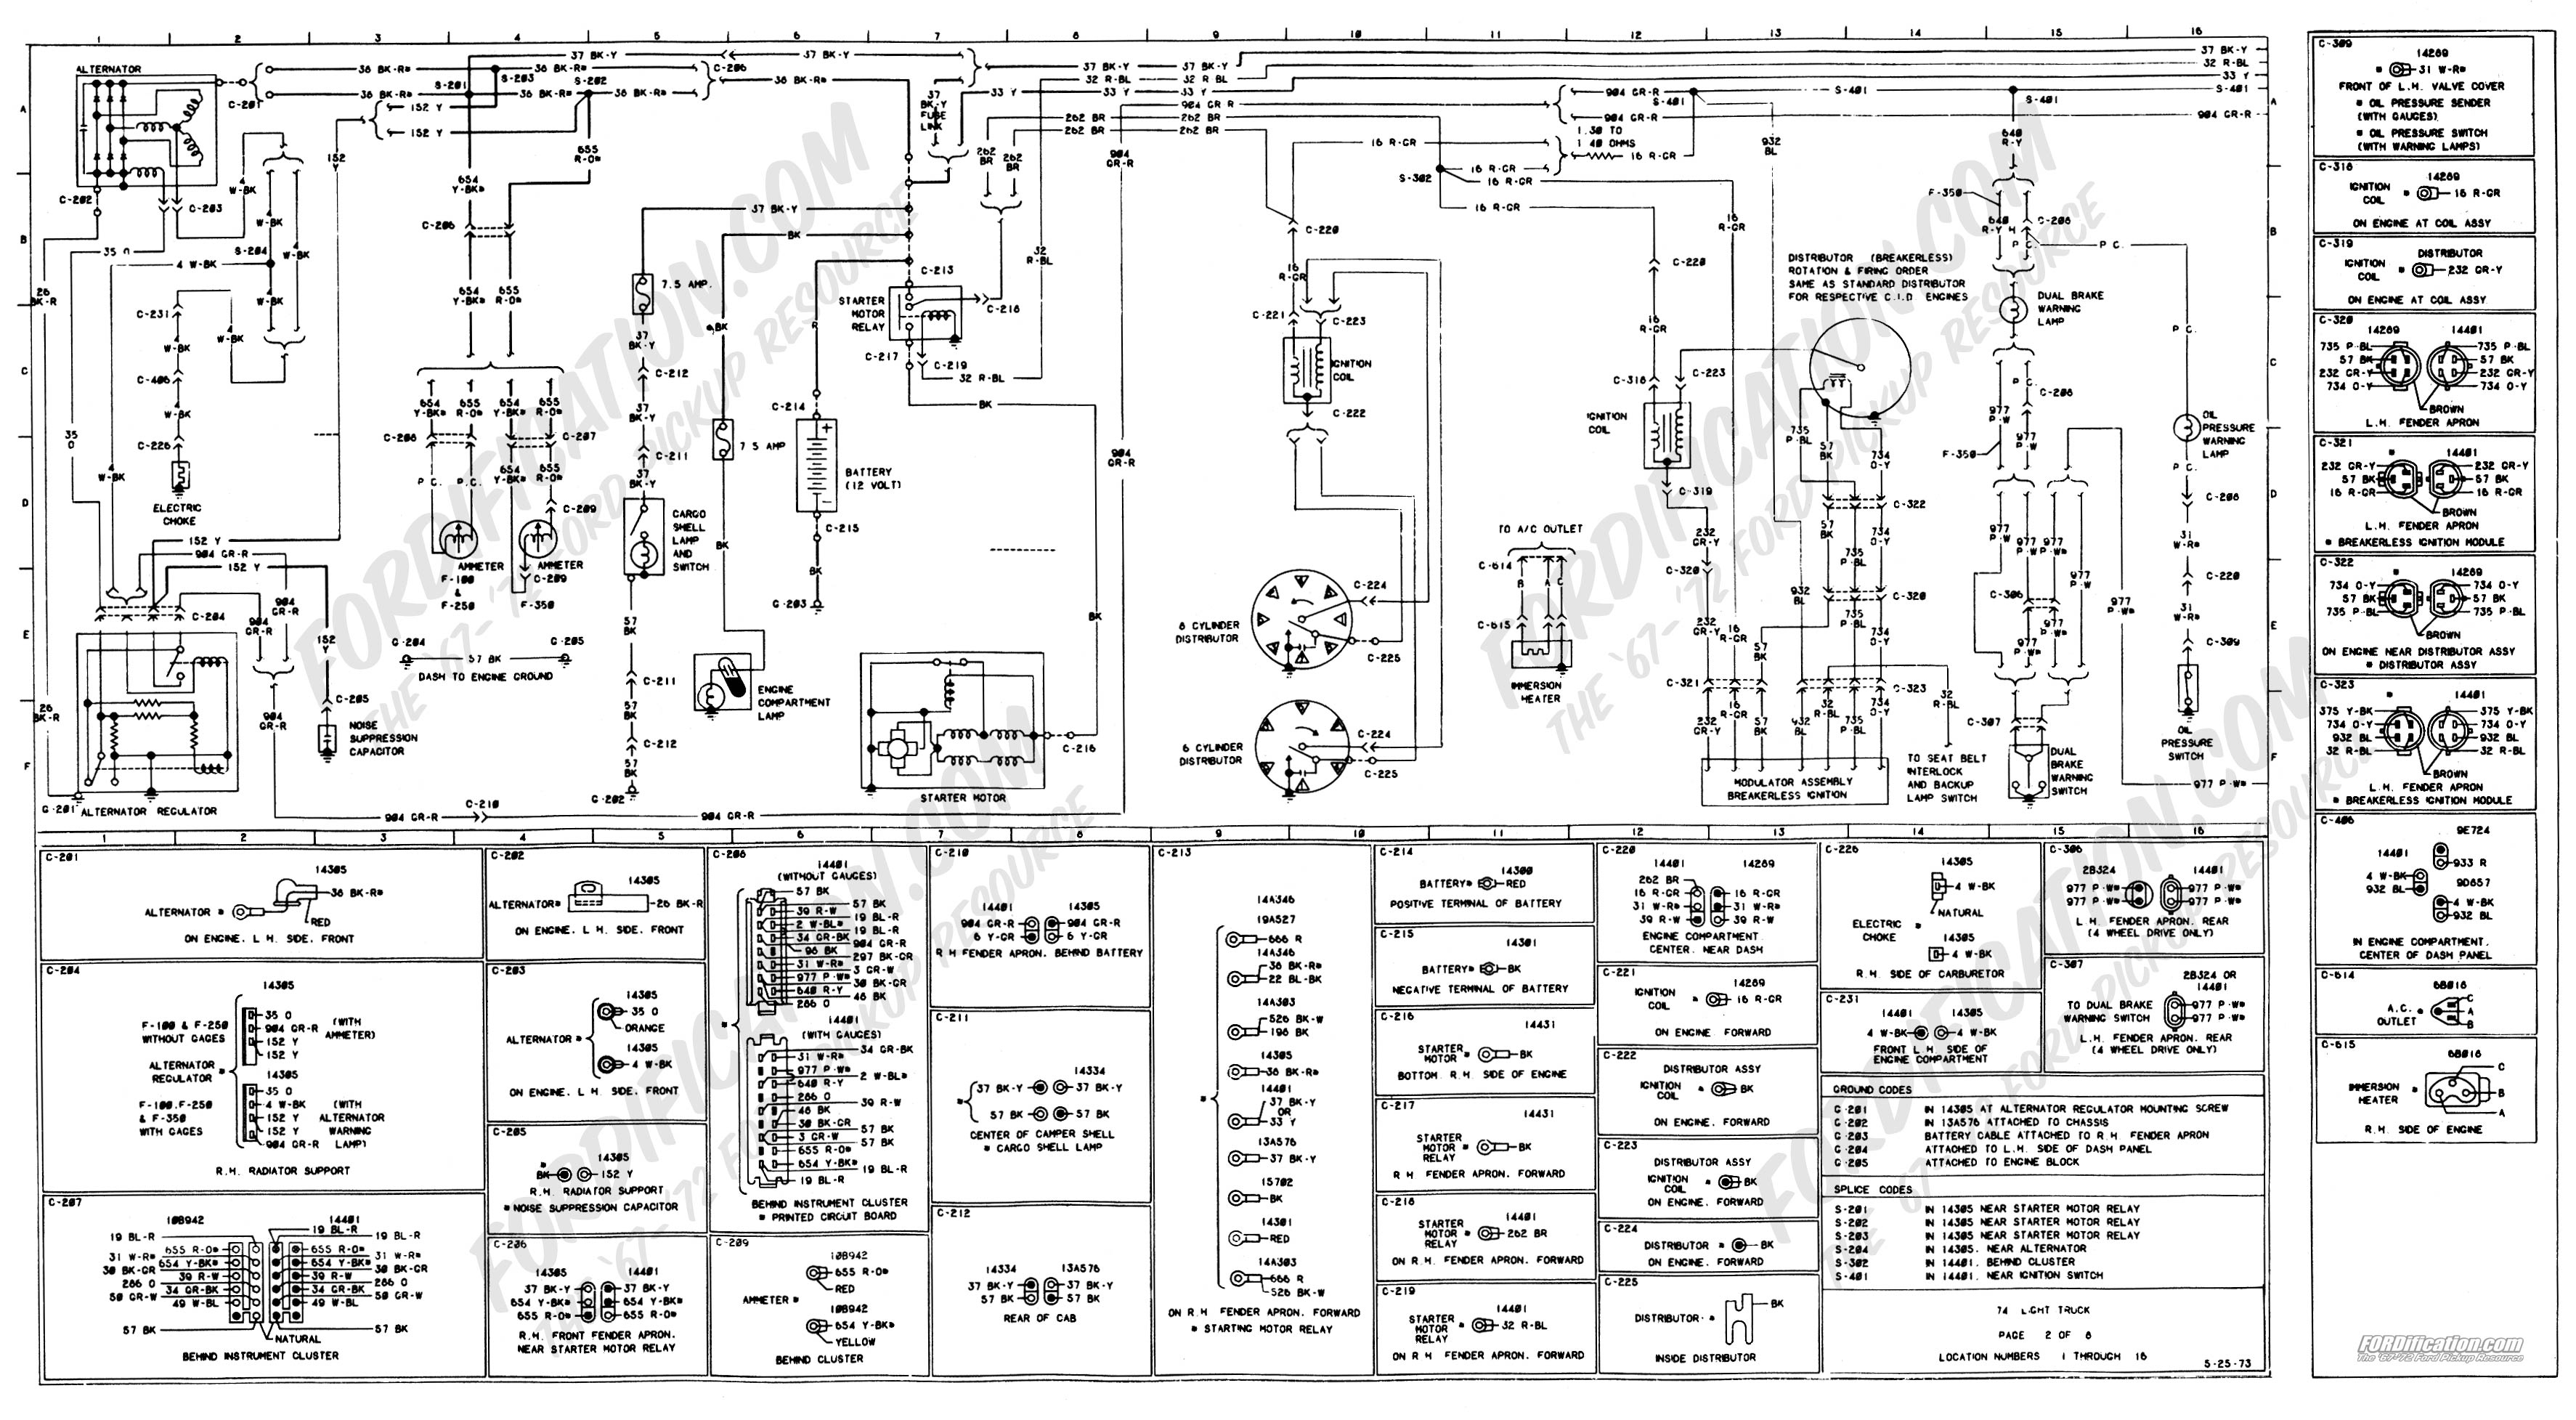 Wiring Diagram For Ford Pickup - Wiring Diagrams Hubs - Ford 8N Wiring Diagram